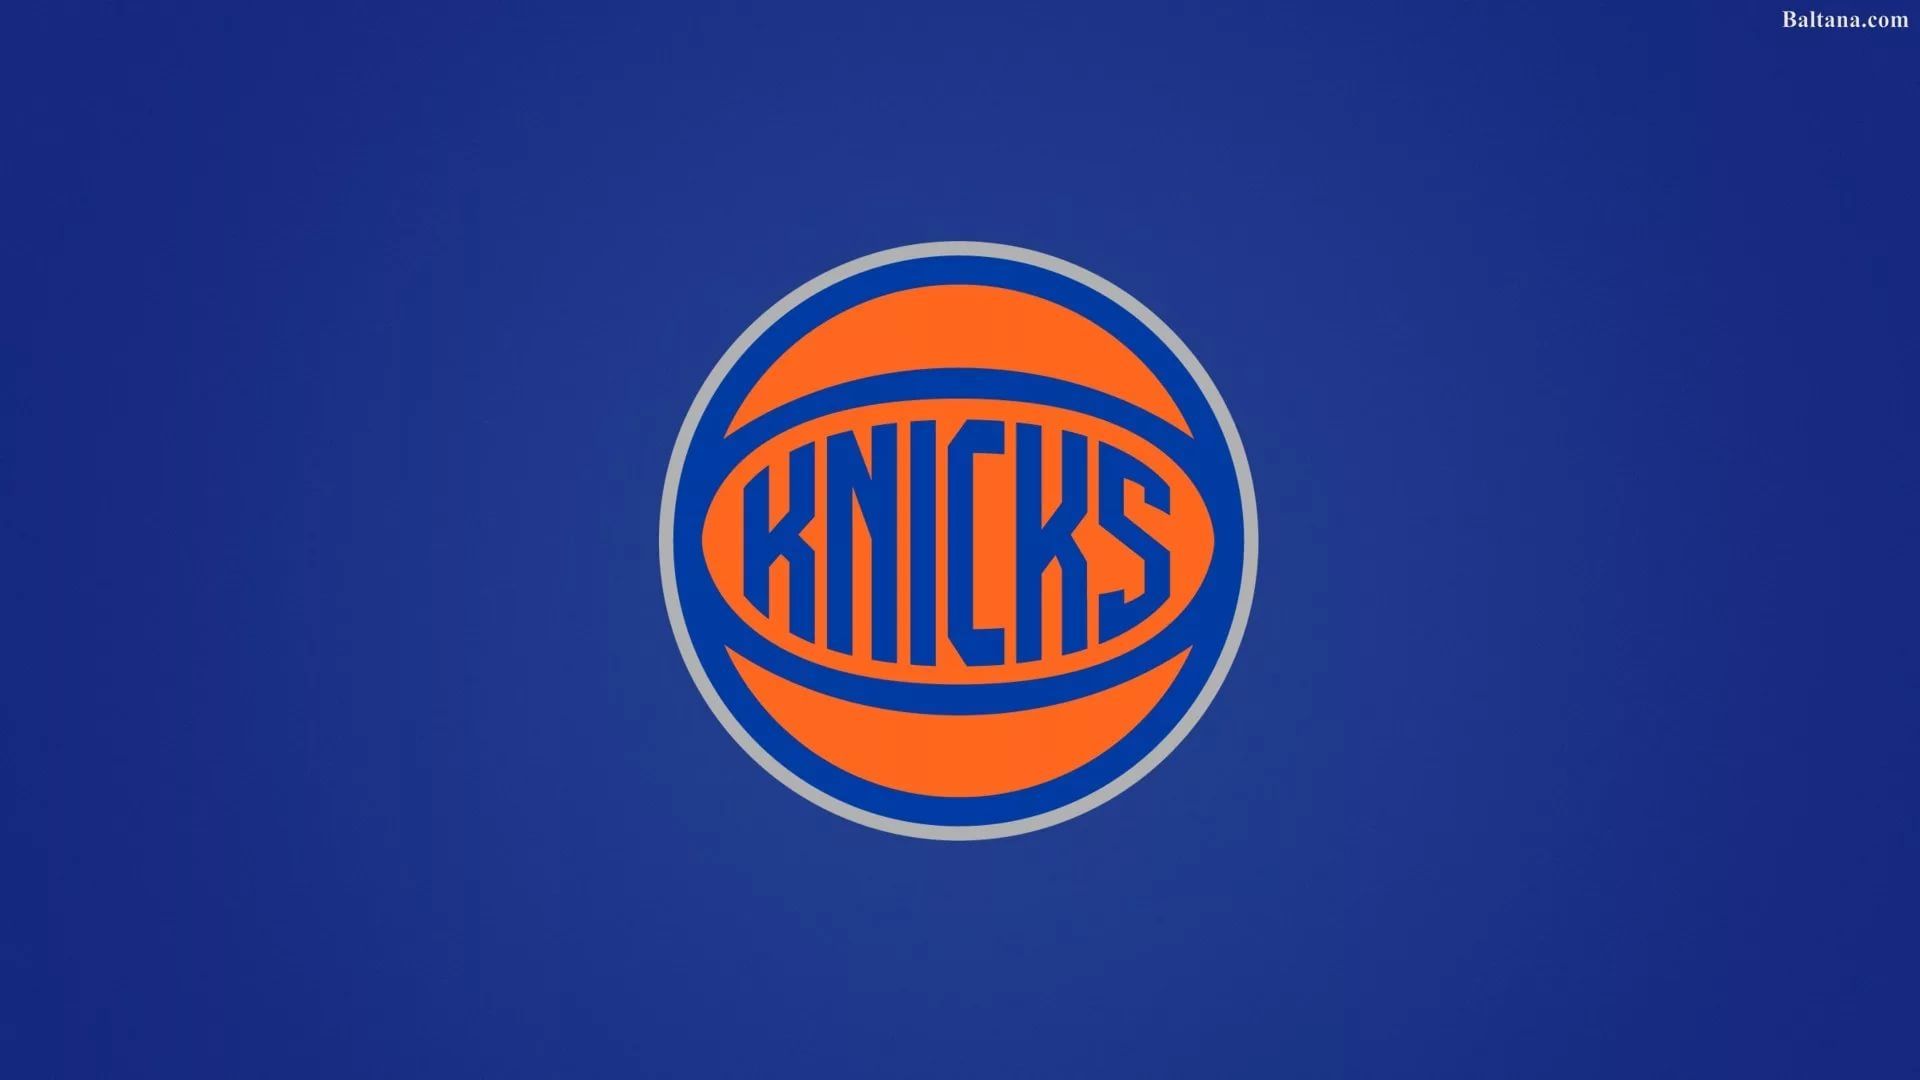 New York Knicks download free wallpaper image search